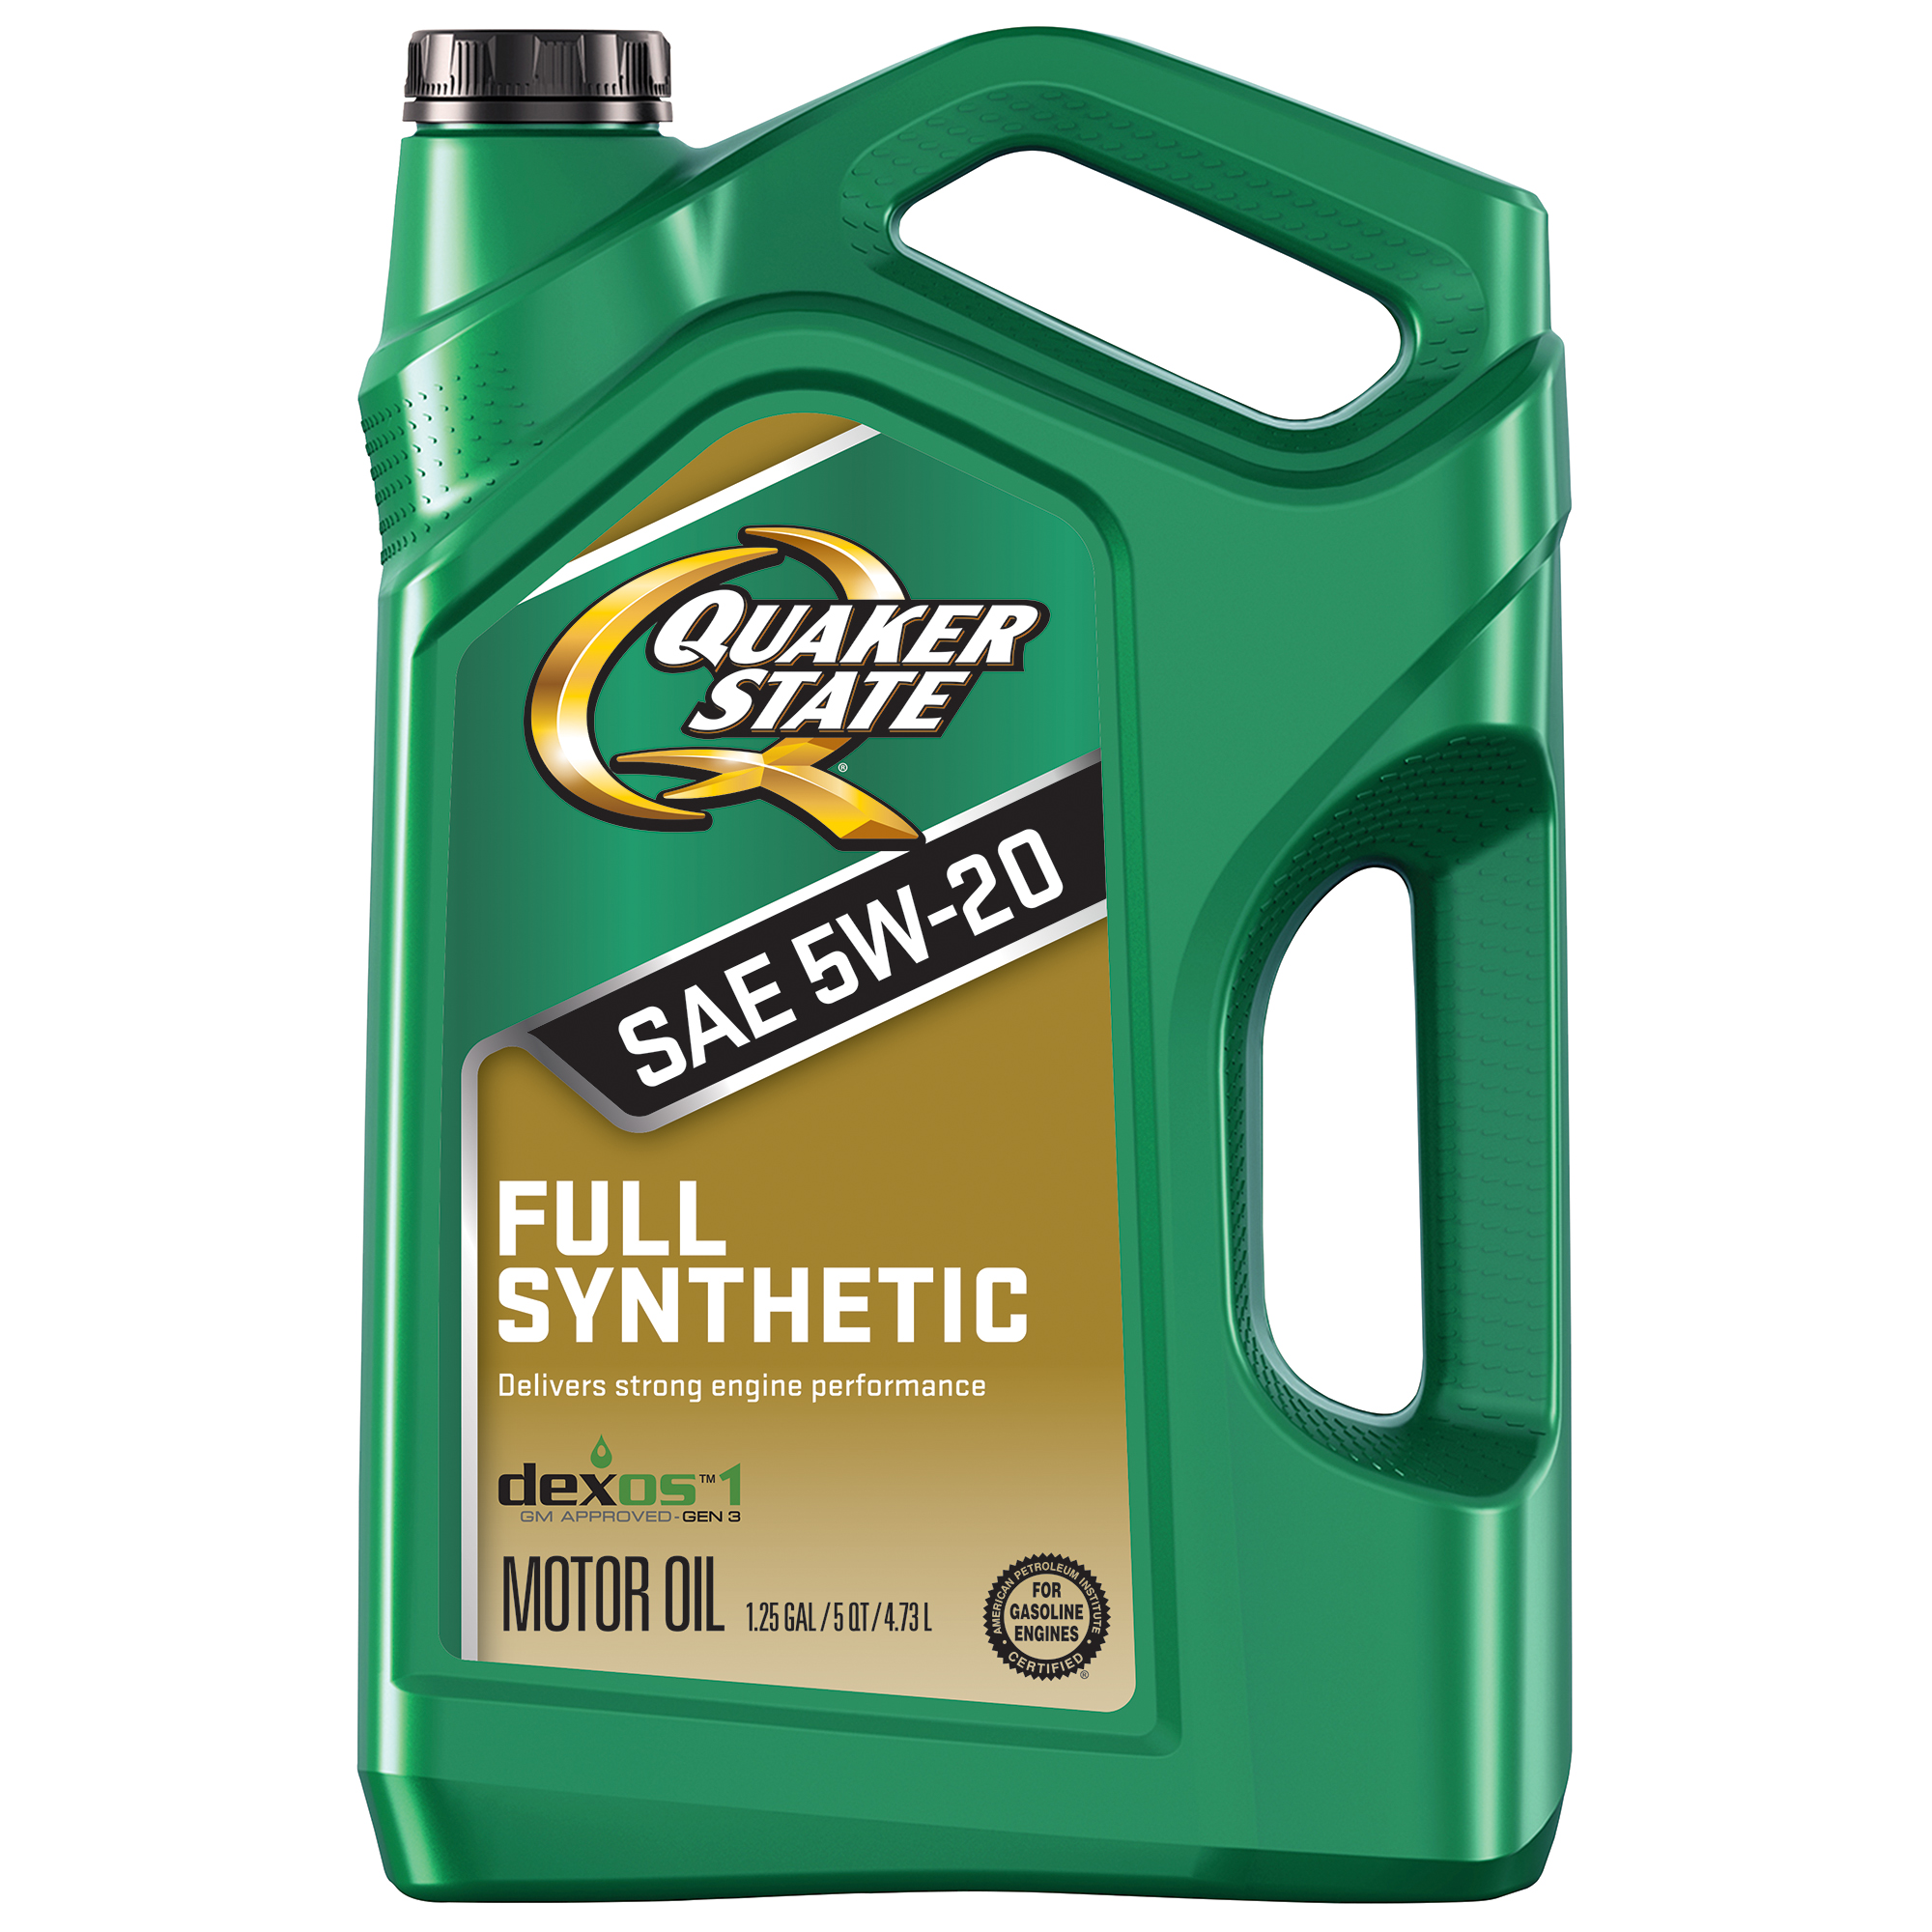 Quaker State Full Synthetic 5W-20 Motor Oil, 5-Quart - image 1 of 6